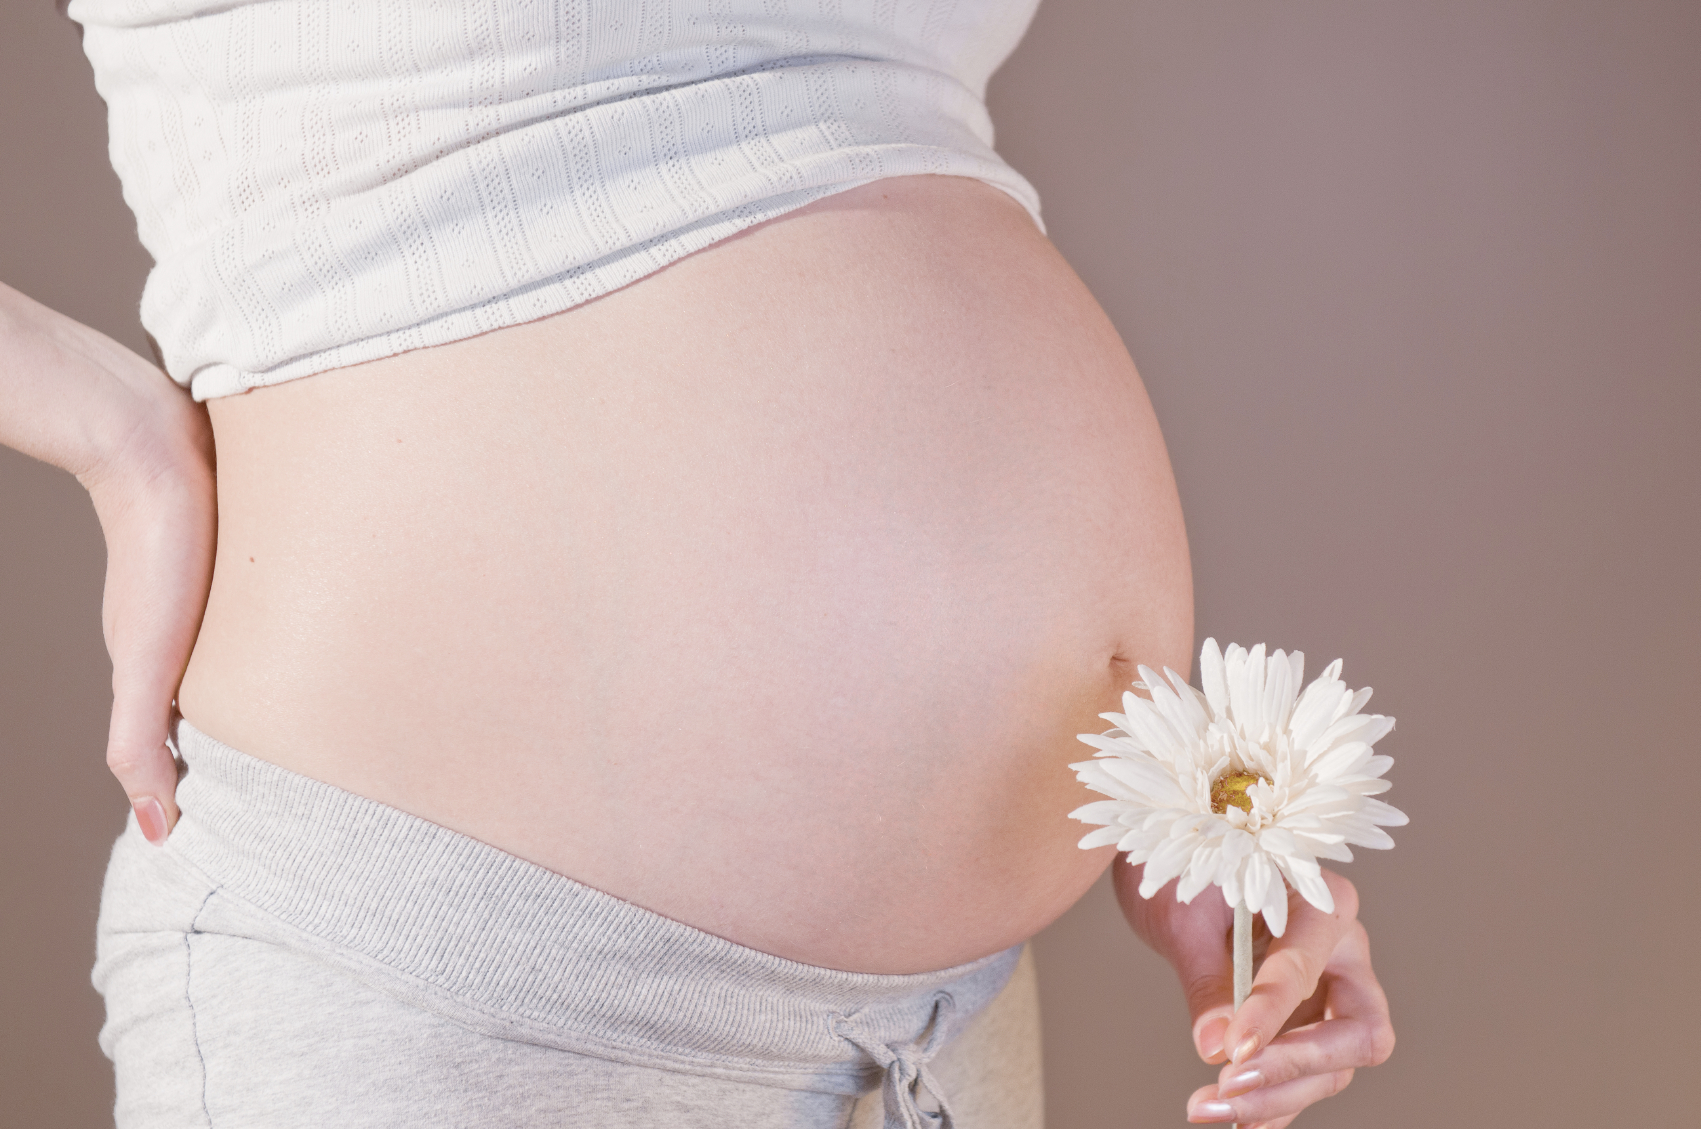 Mang thai khiến hormone thay đổi nhiều